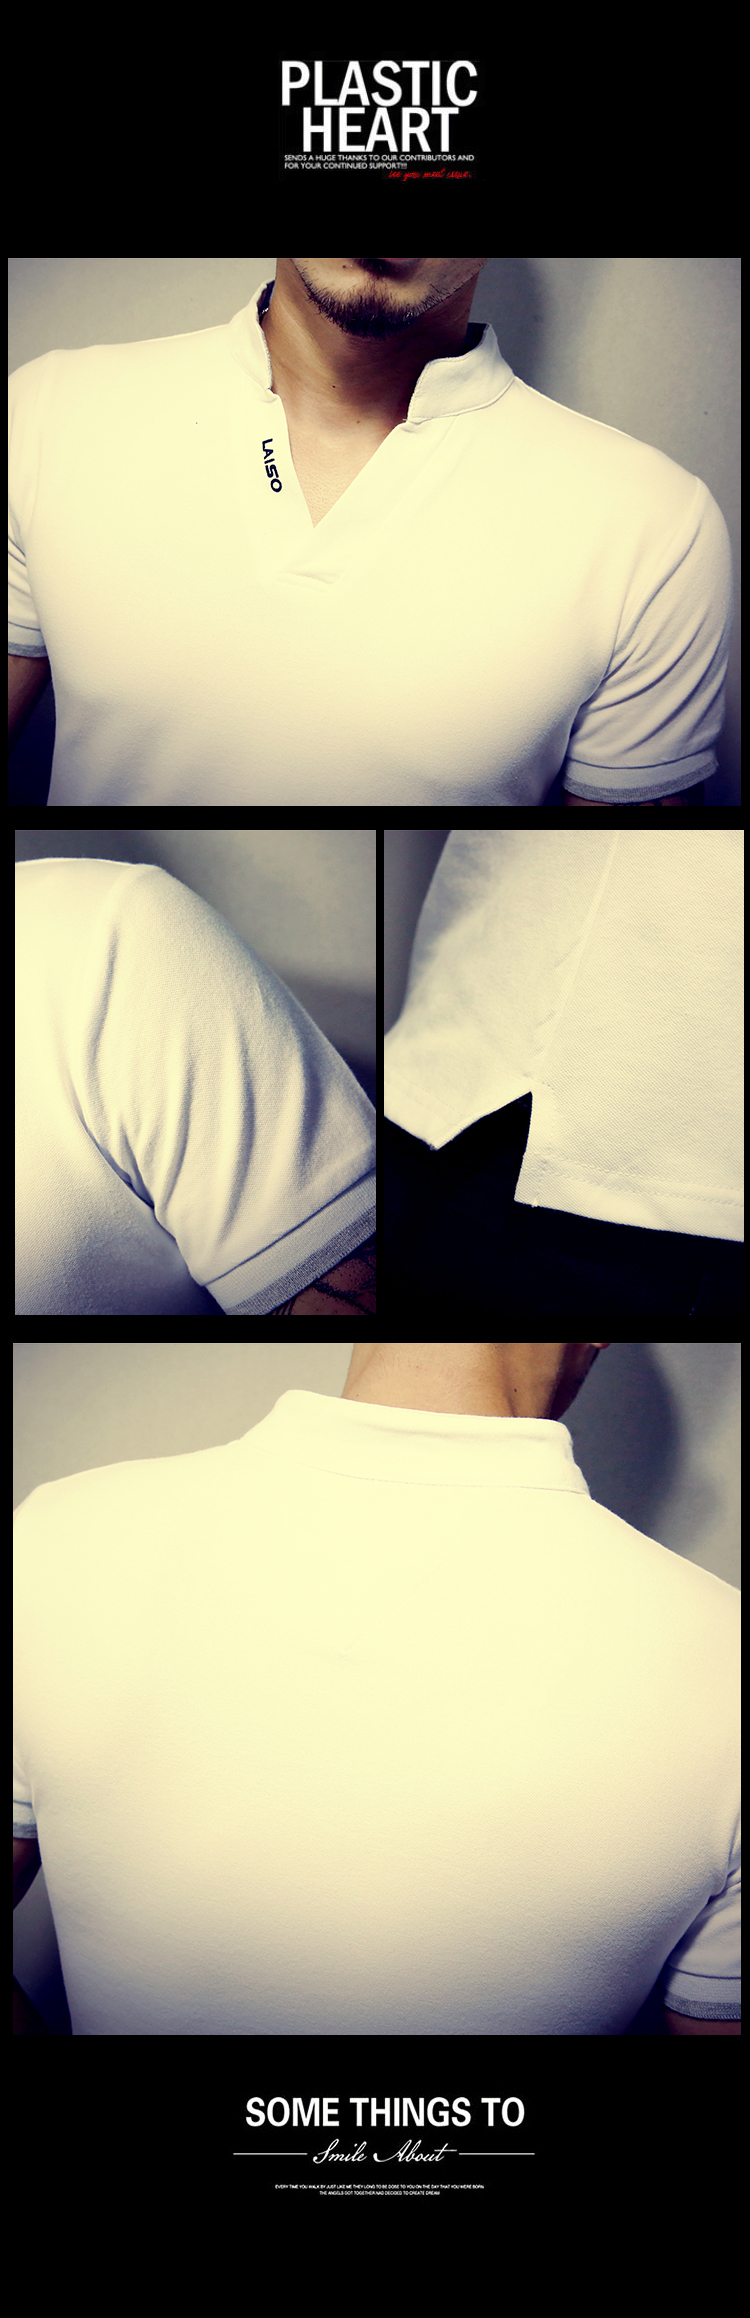 Hot-Sale-New-Fashion-Brand-Men-Polo-shirt-Solid-Color-Short-Sleeve-Slim-Fit-Shirt-Men-Cotton-polo-Sh-32788980061